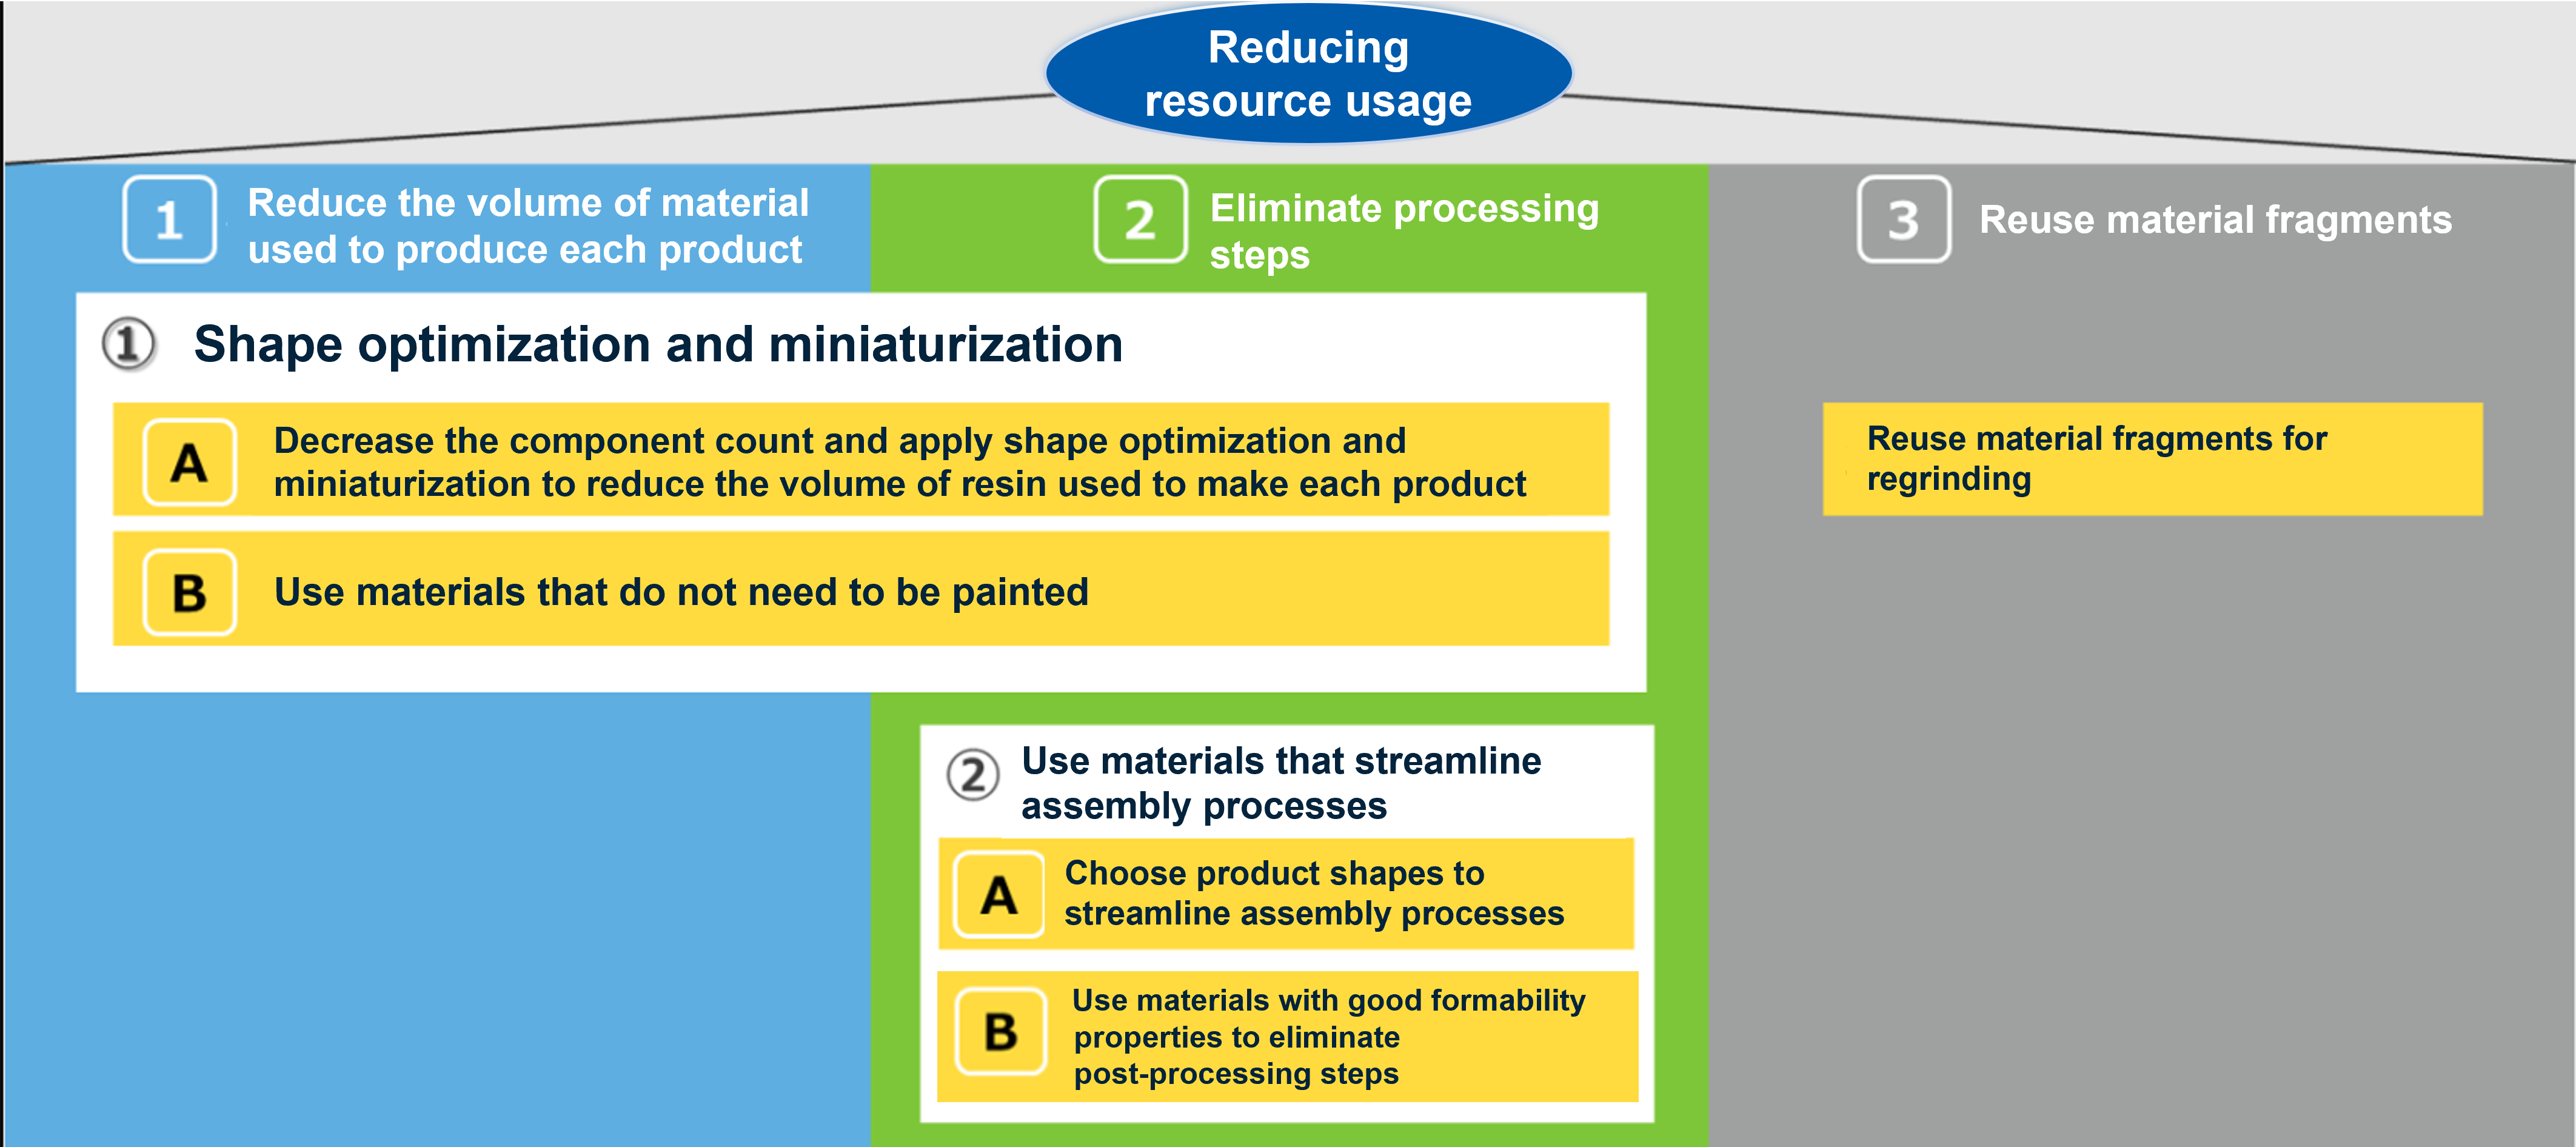 Three strategies for reducing resource usage